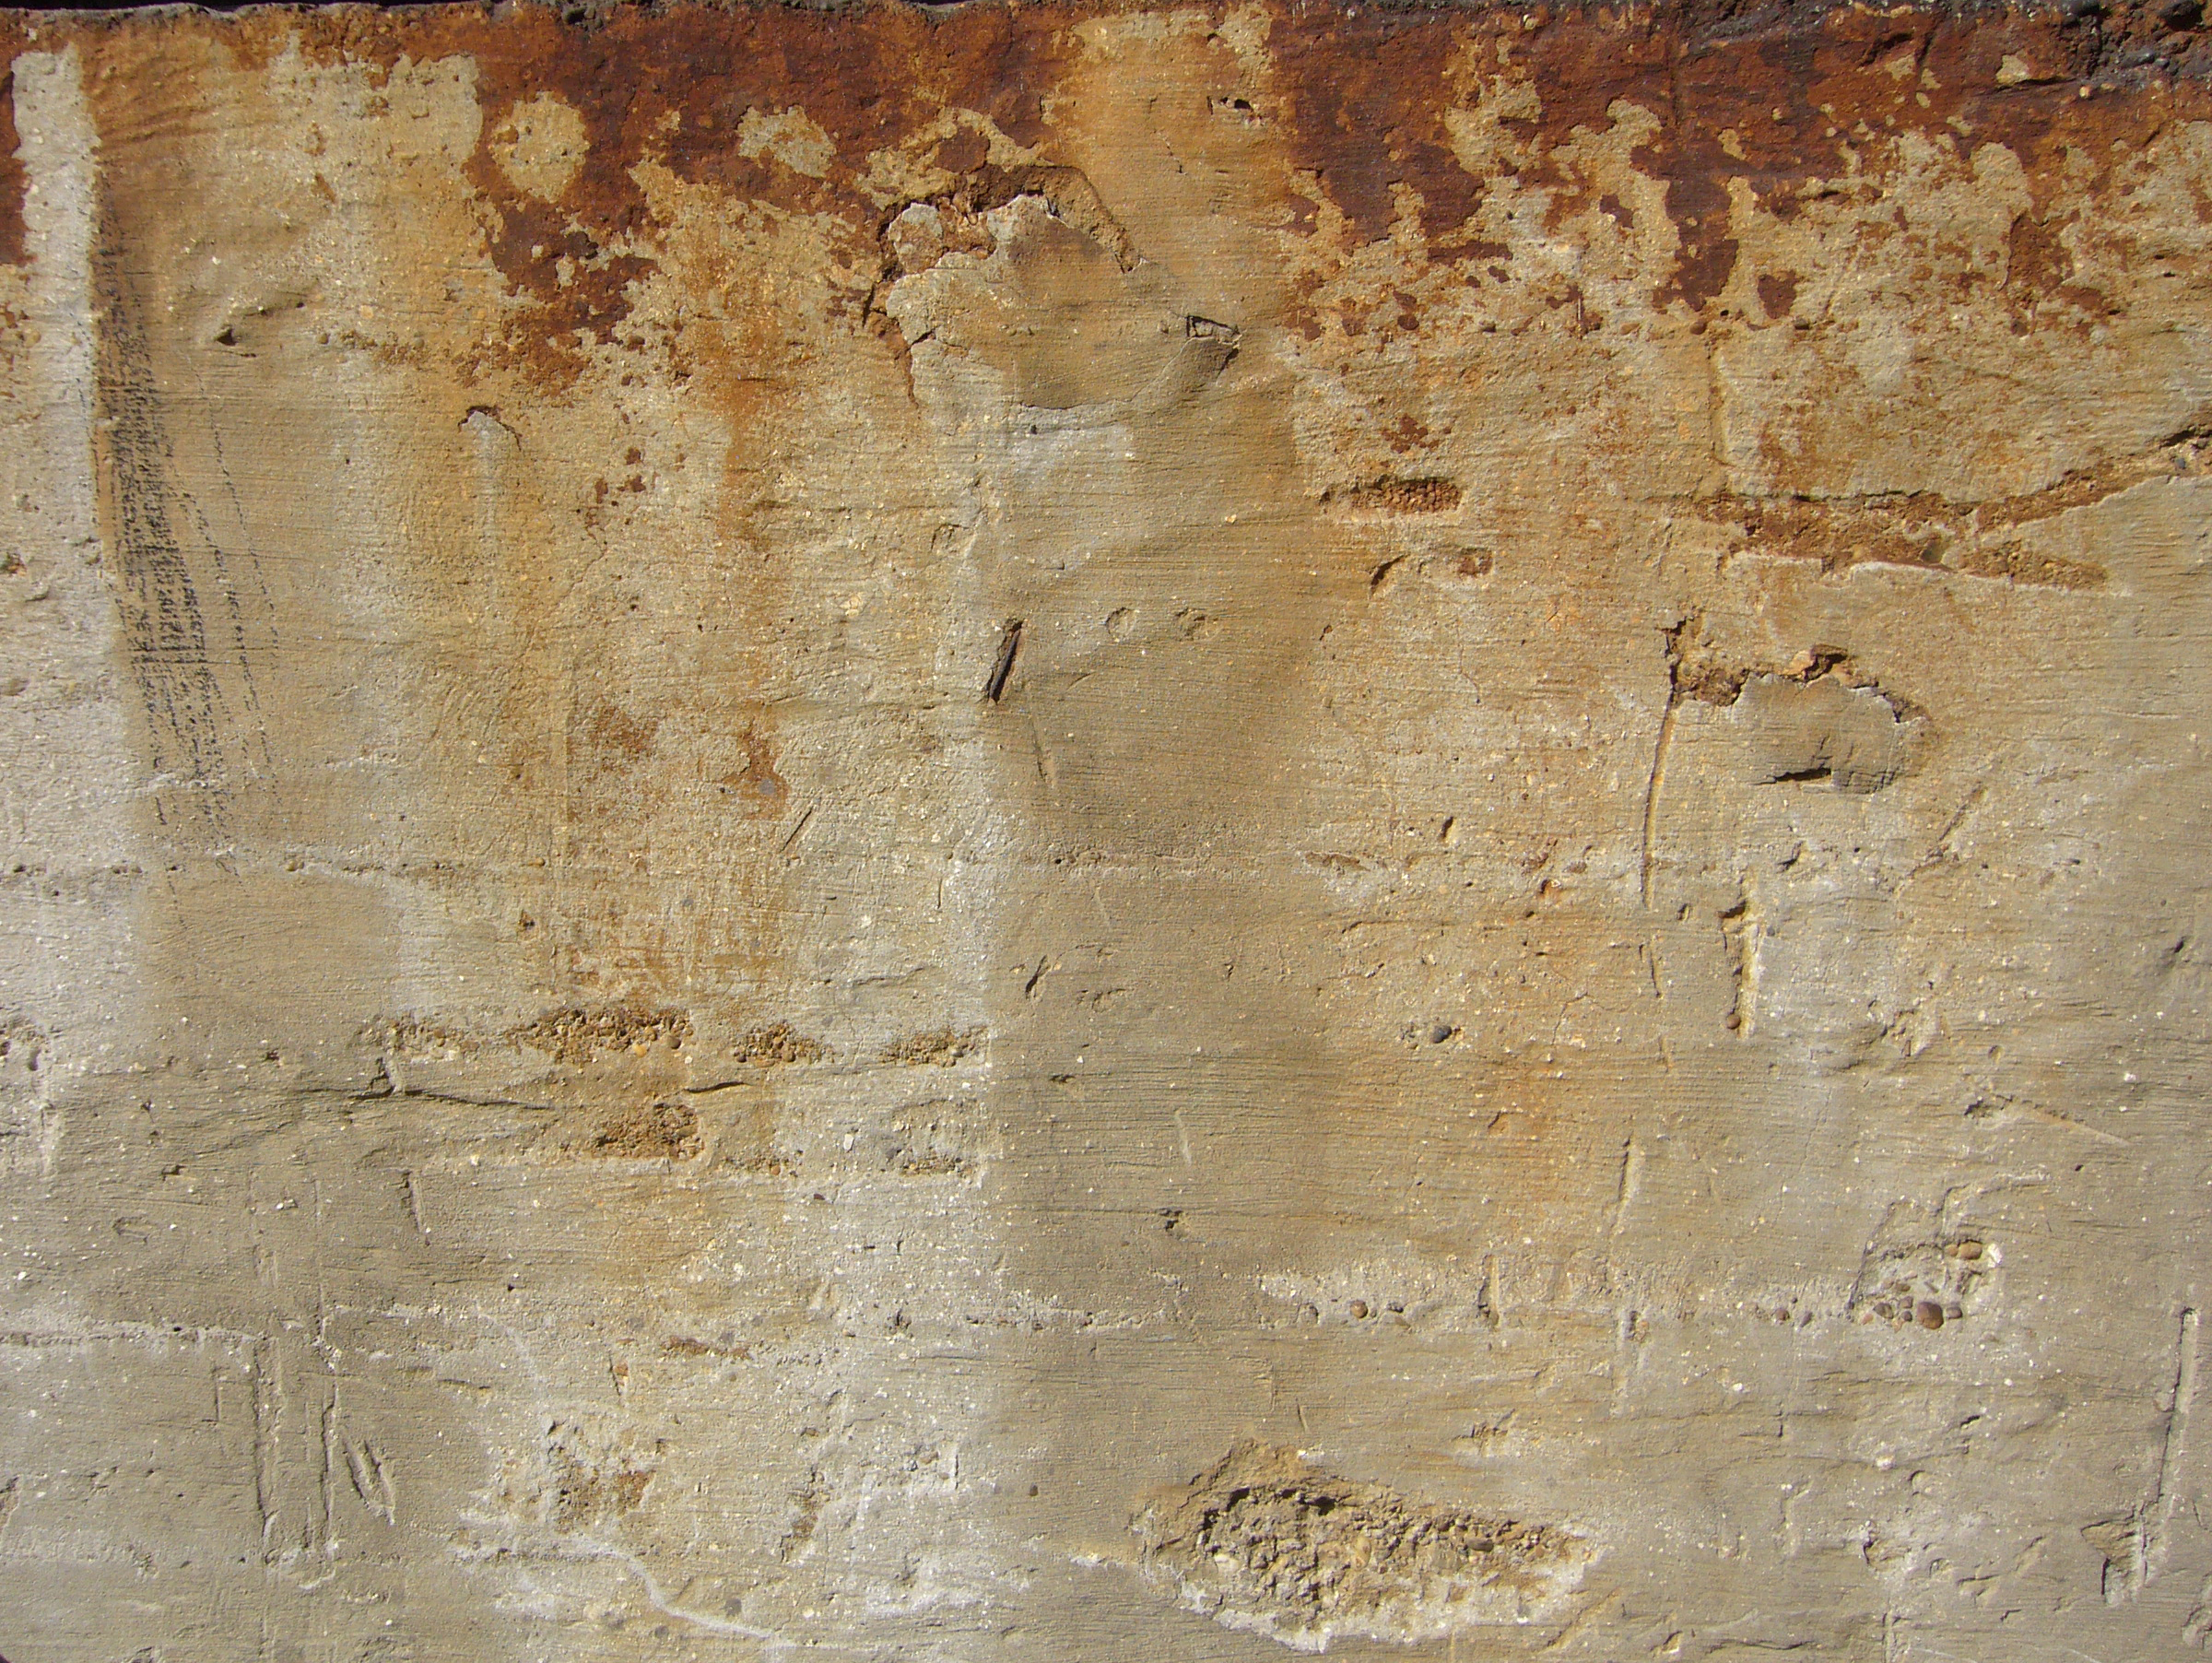 Dripping rust texture photo